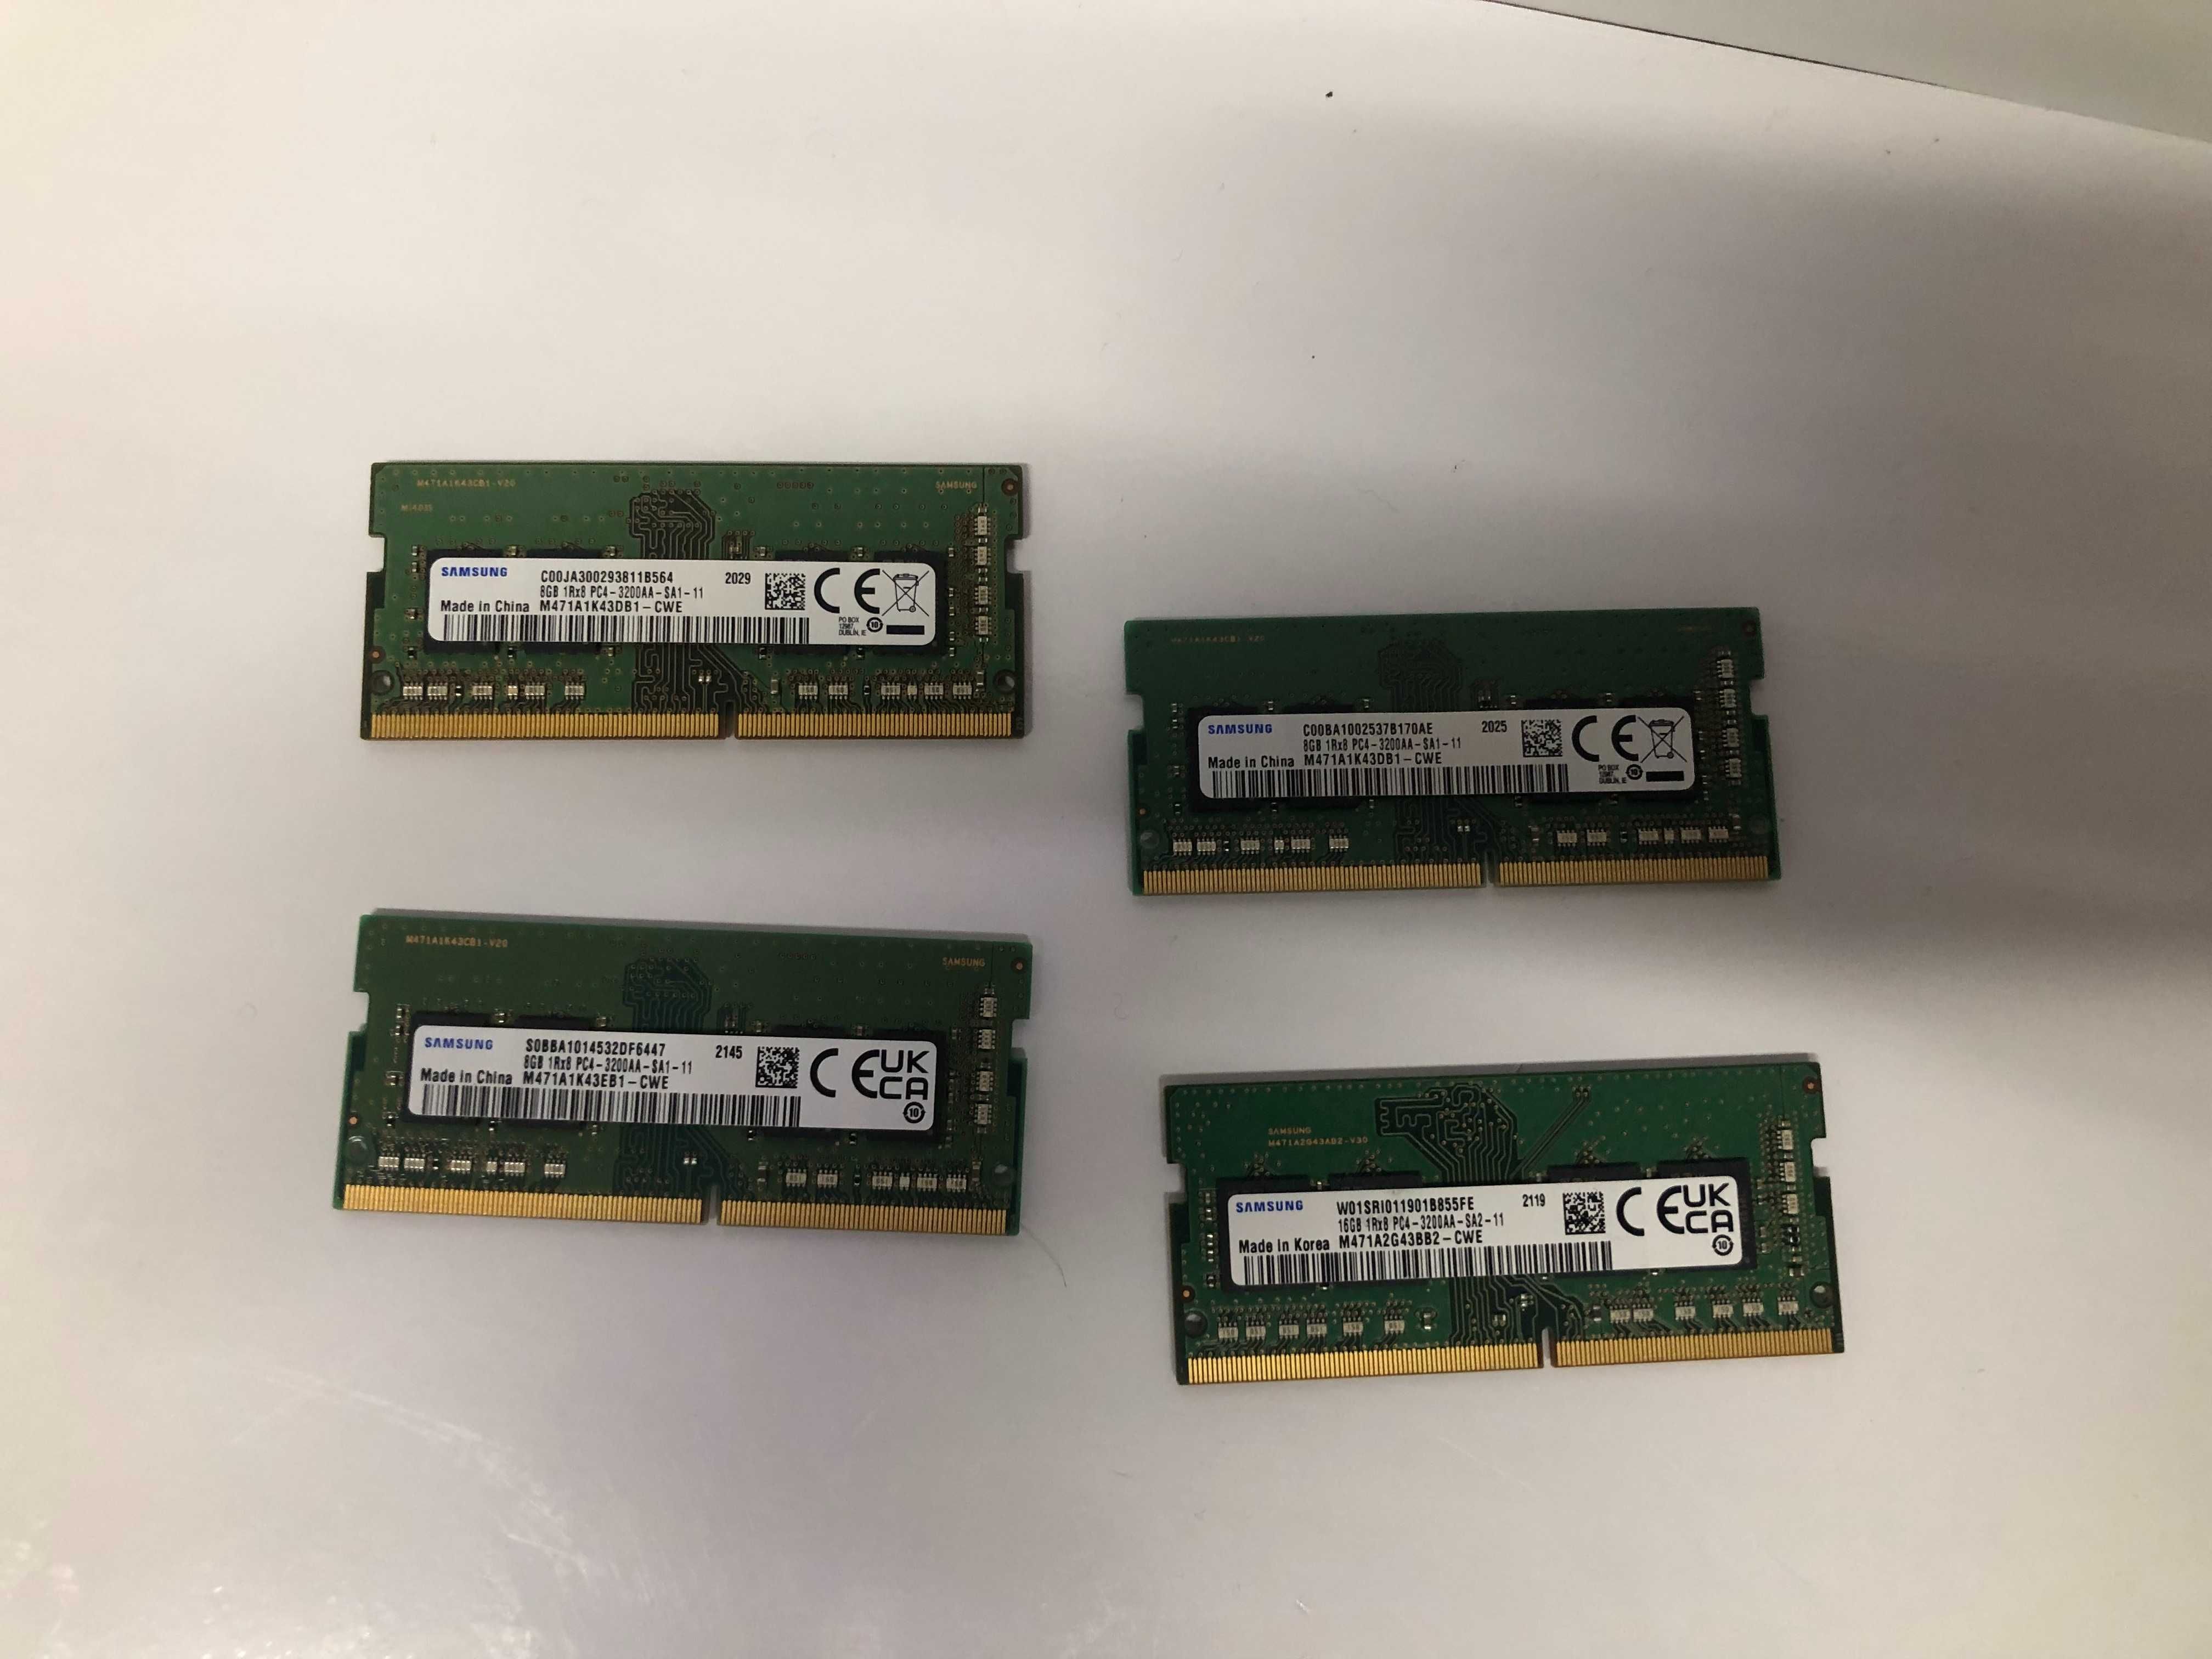 Memorii laptop Sodimm DDR4 8 Gb 3200 Samsung M471A1K43EB1, Garantie